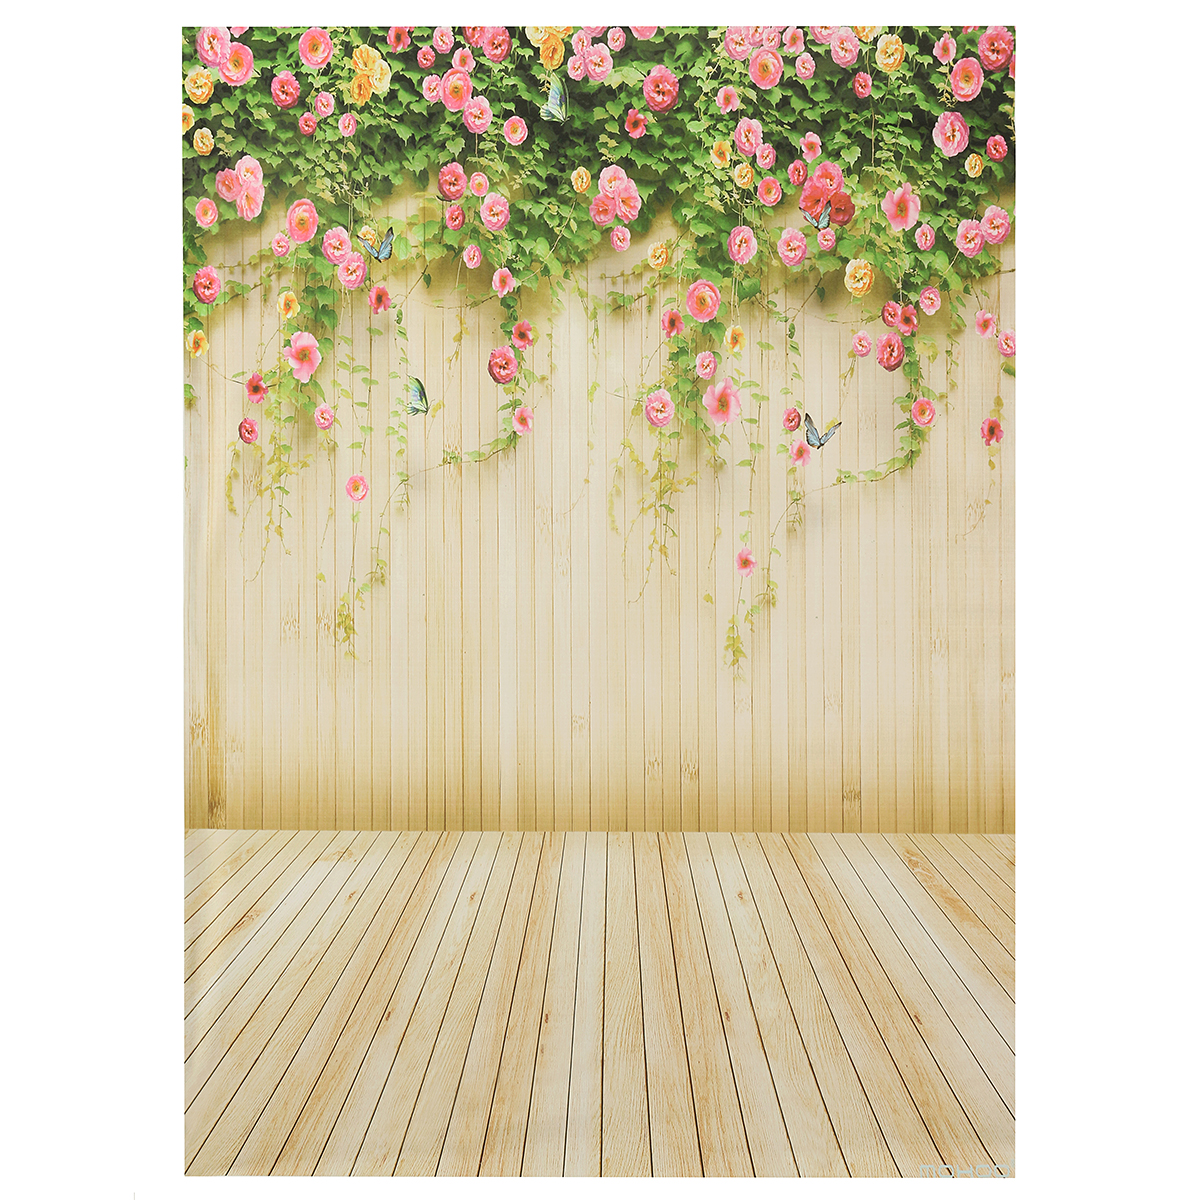 5x7ft-Flower-Wooden-Floor-Party-Background-Backdrop-Photography-Studio-Prop-1947676-11